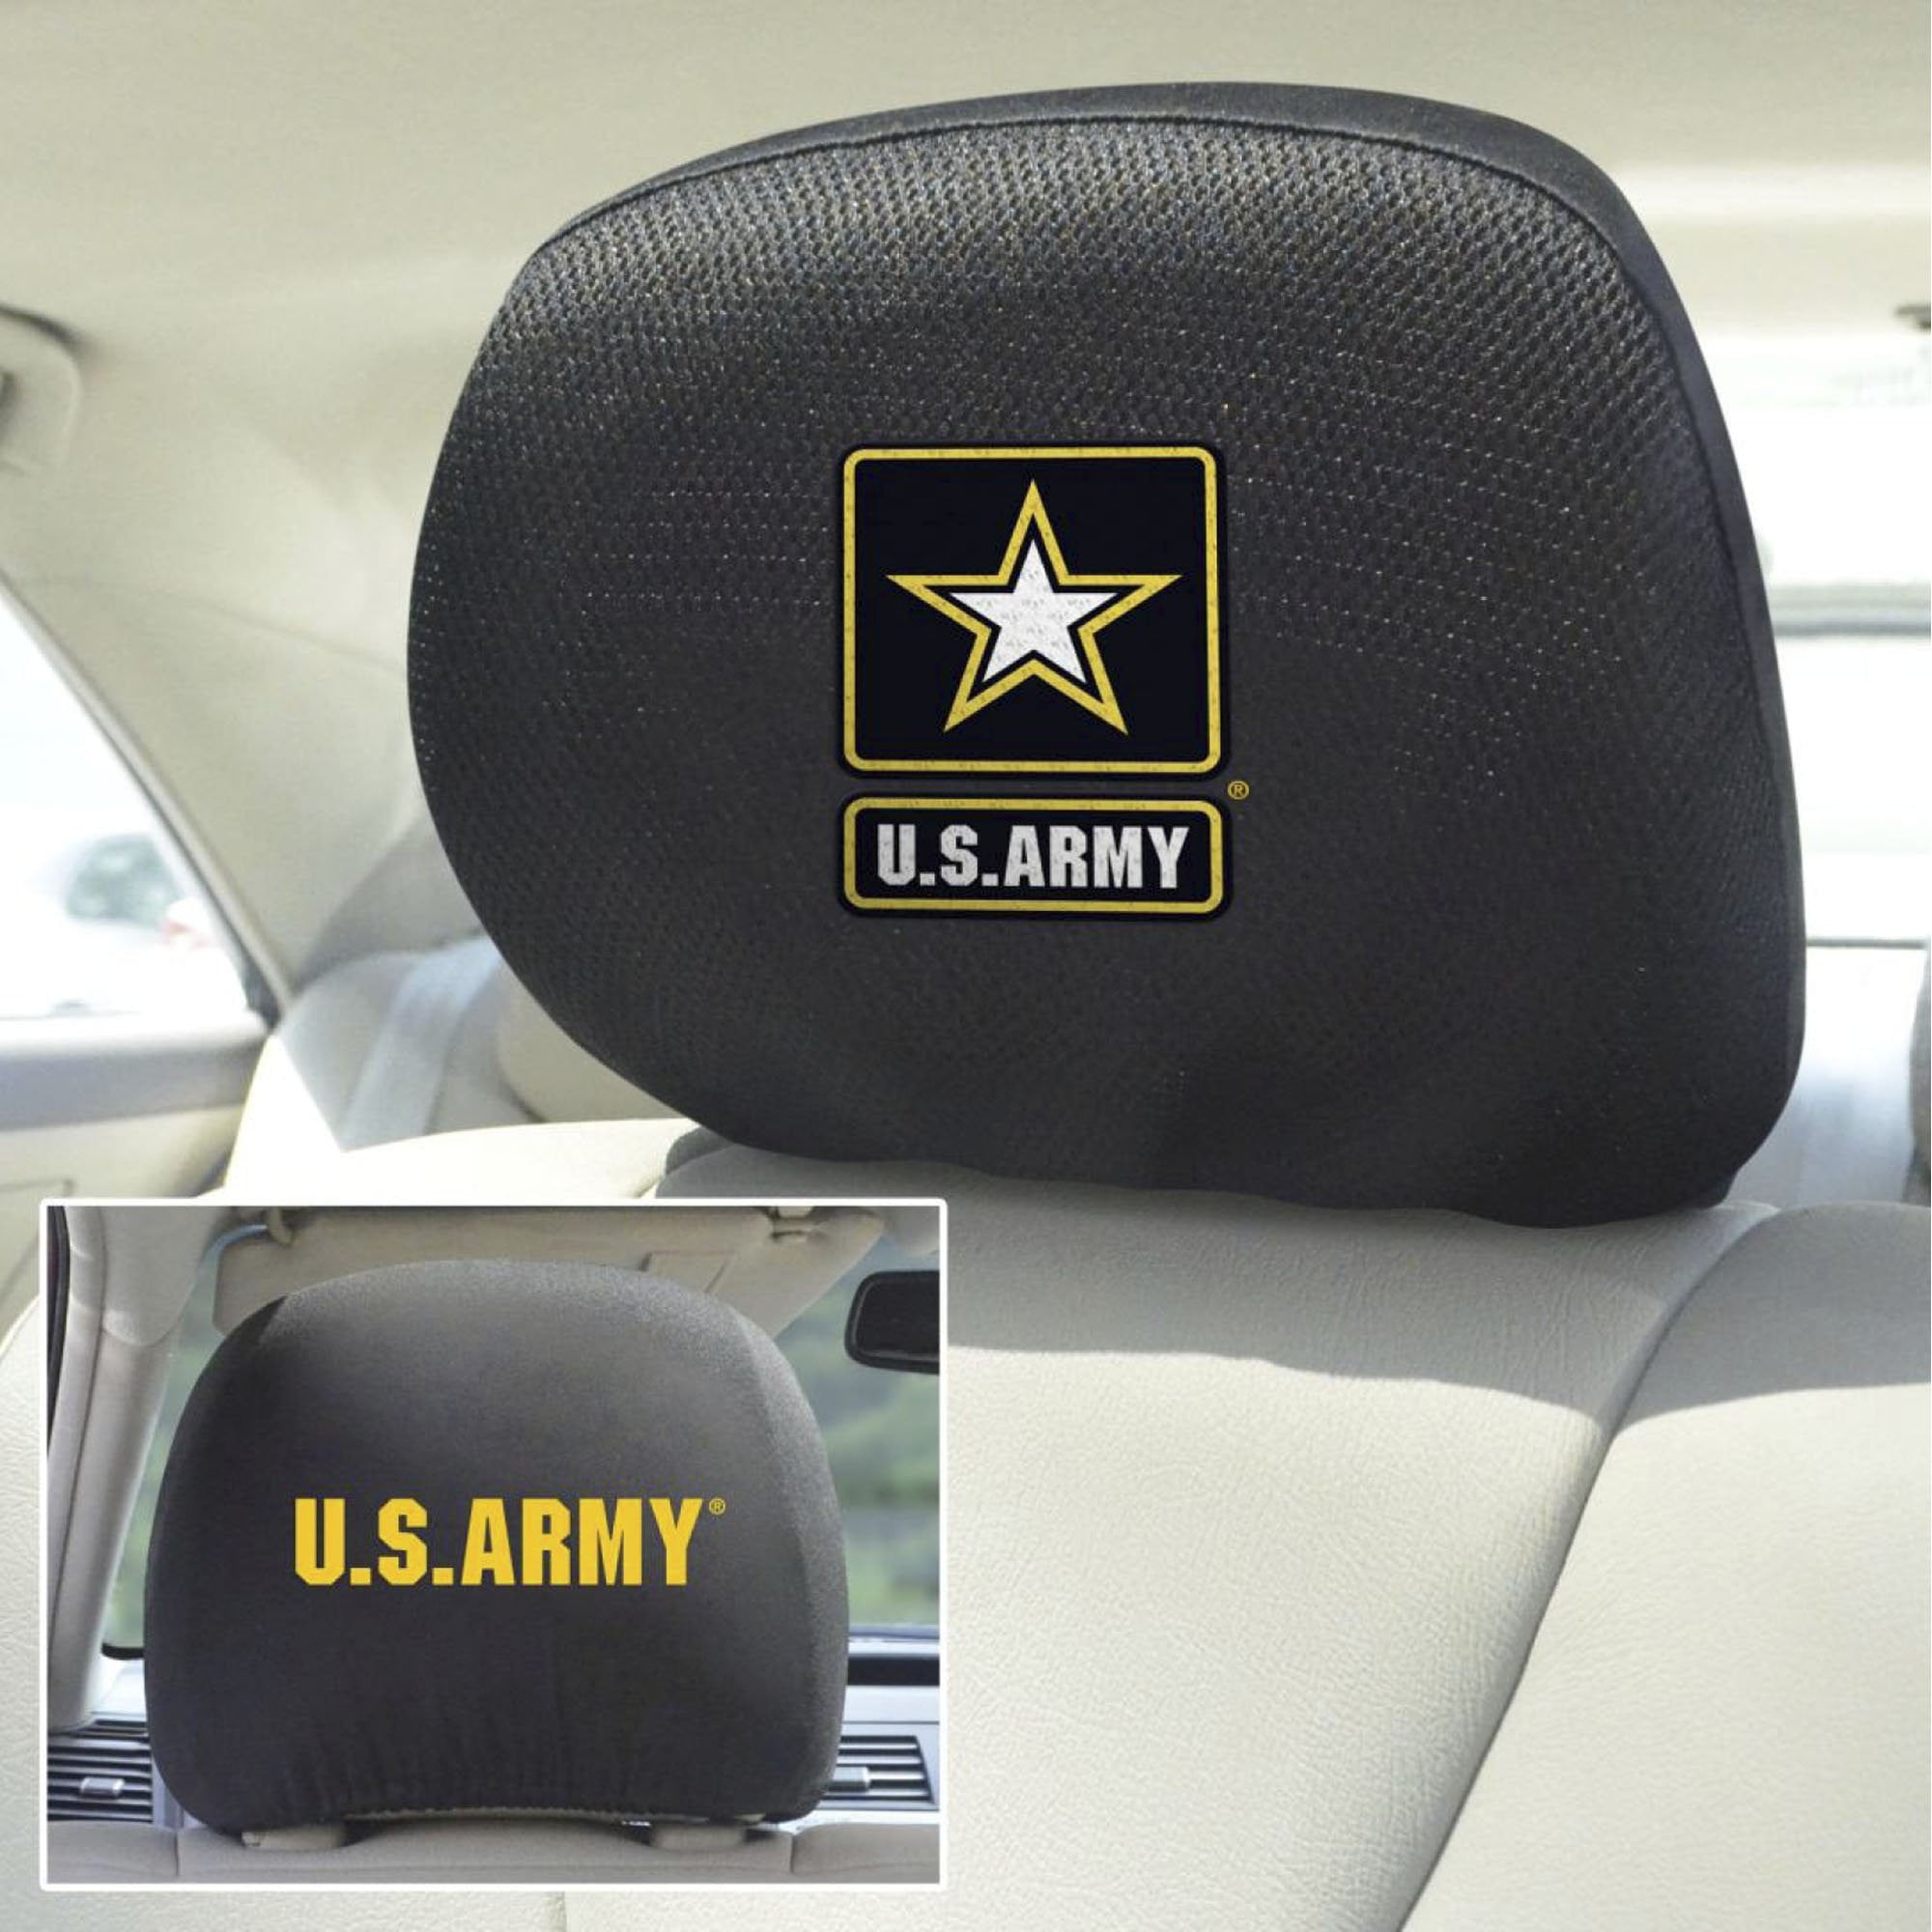 U.S. Army Set of 2 Headrest Covers